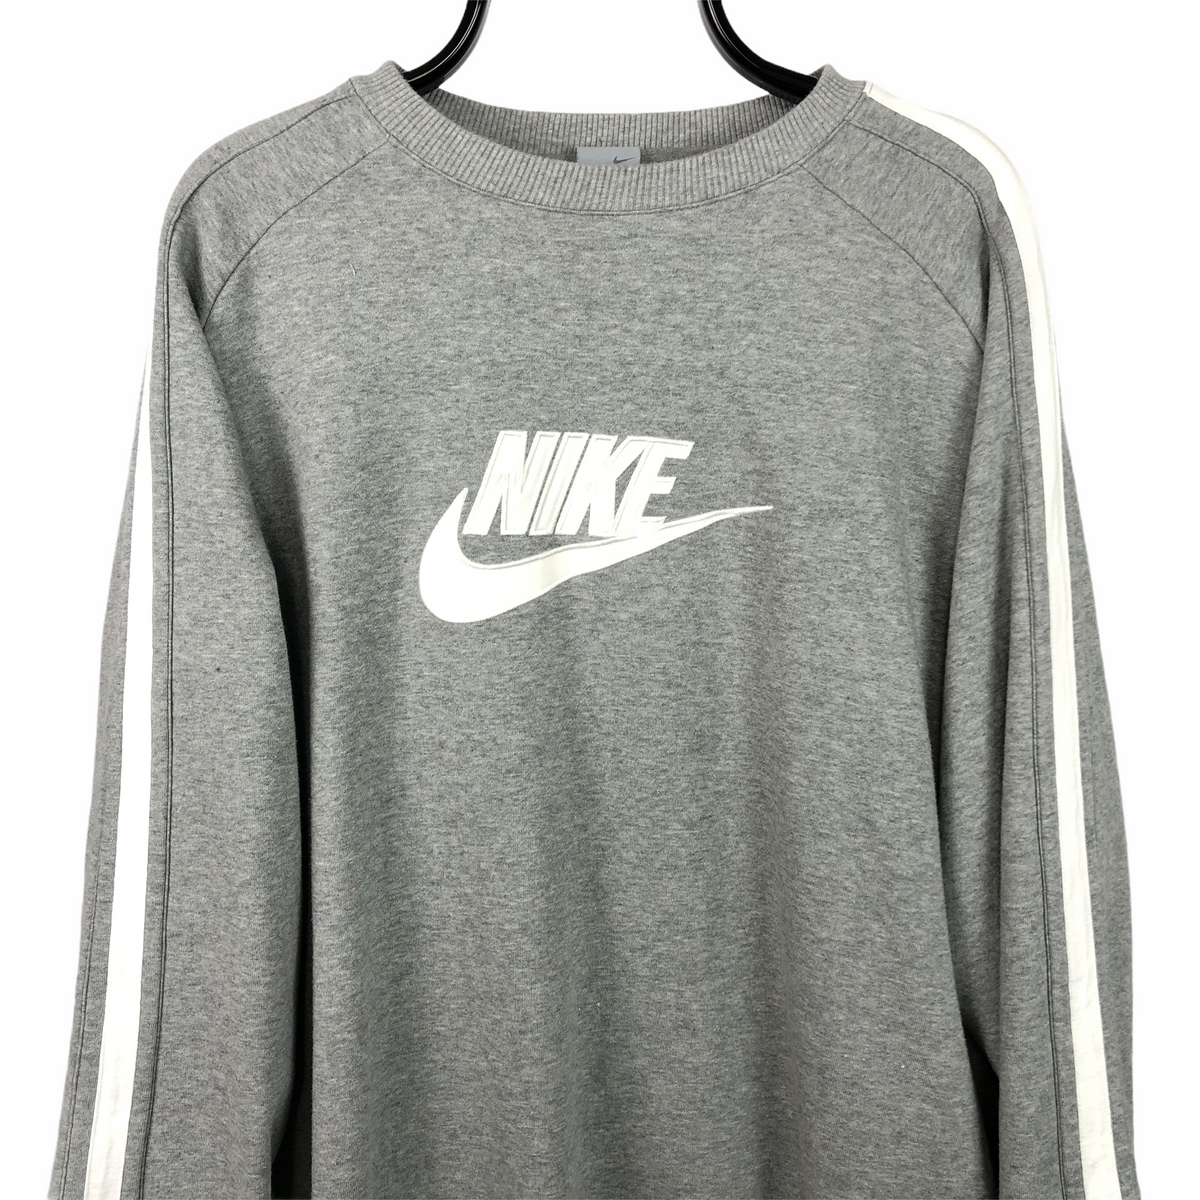 Vintage Nike Spellout Sweatshirt in Grey/White - Men's XL/Women's XXL ...